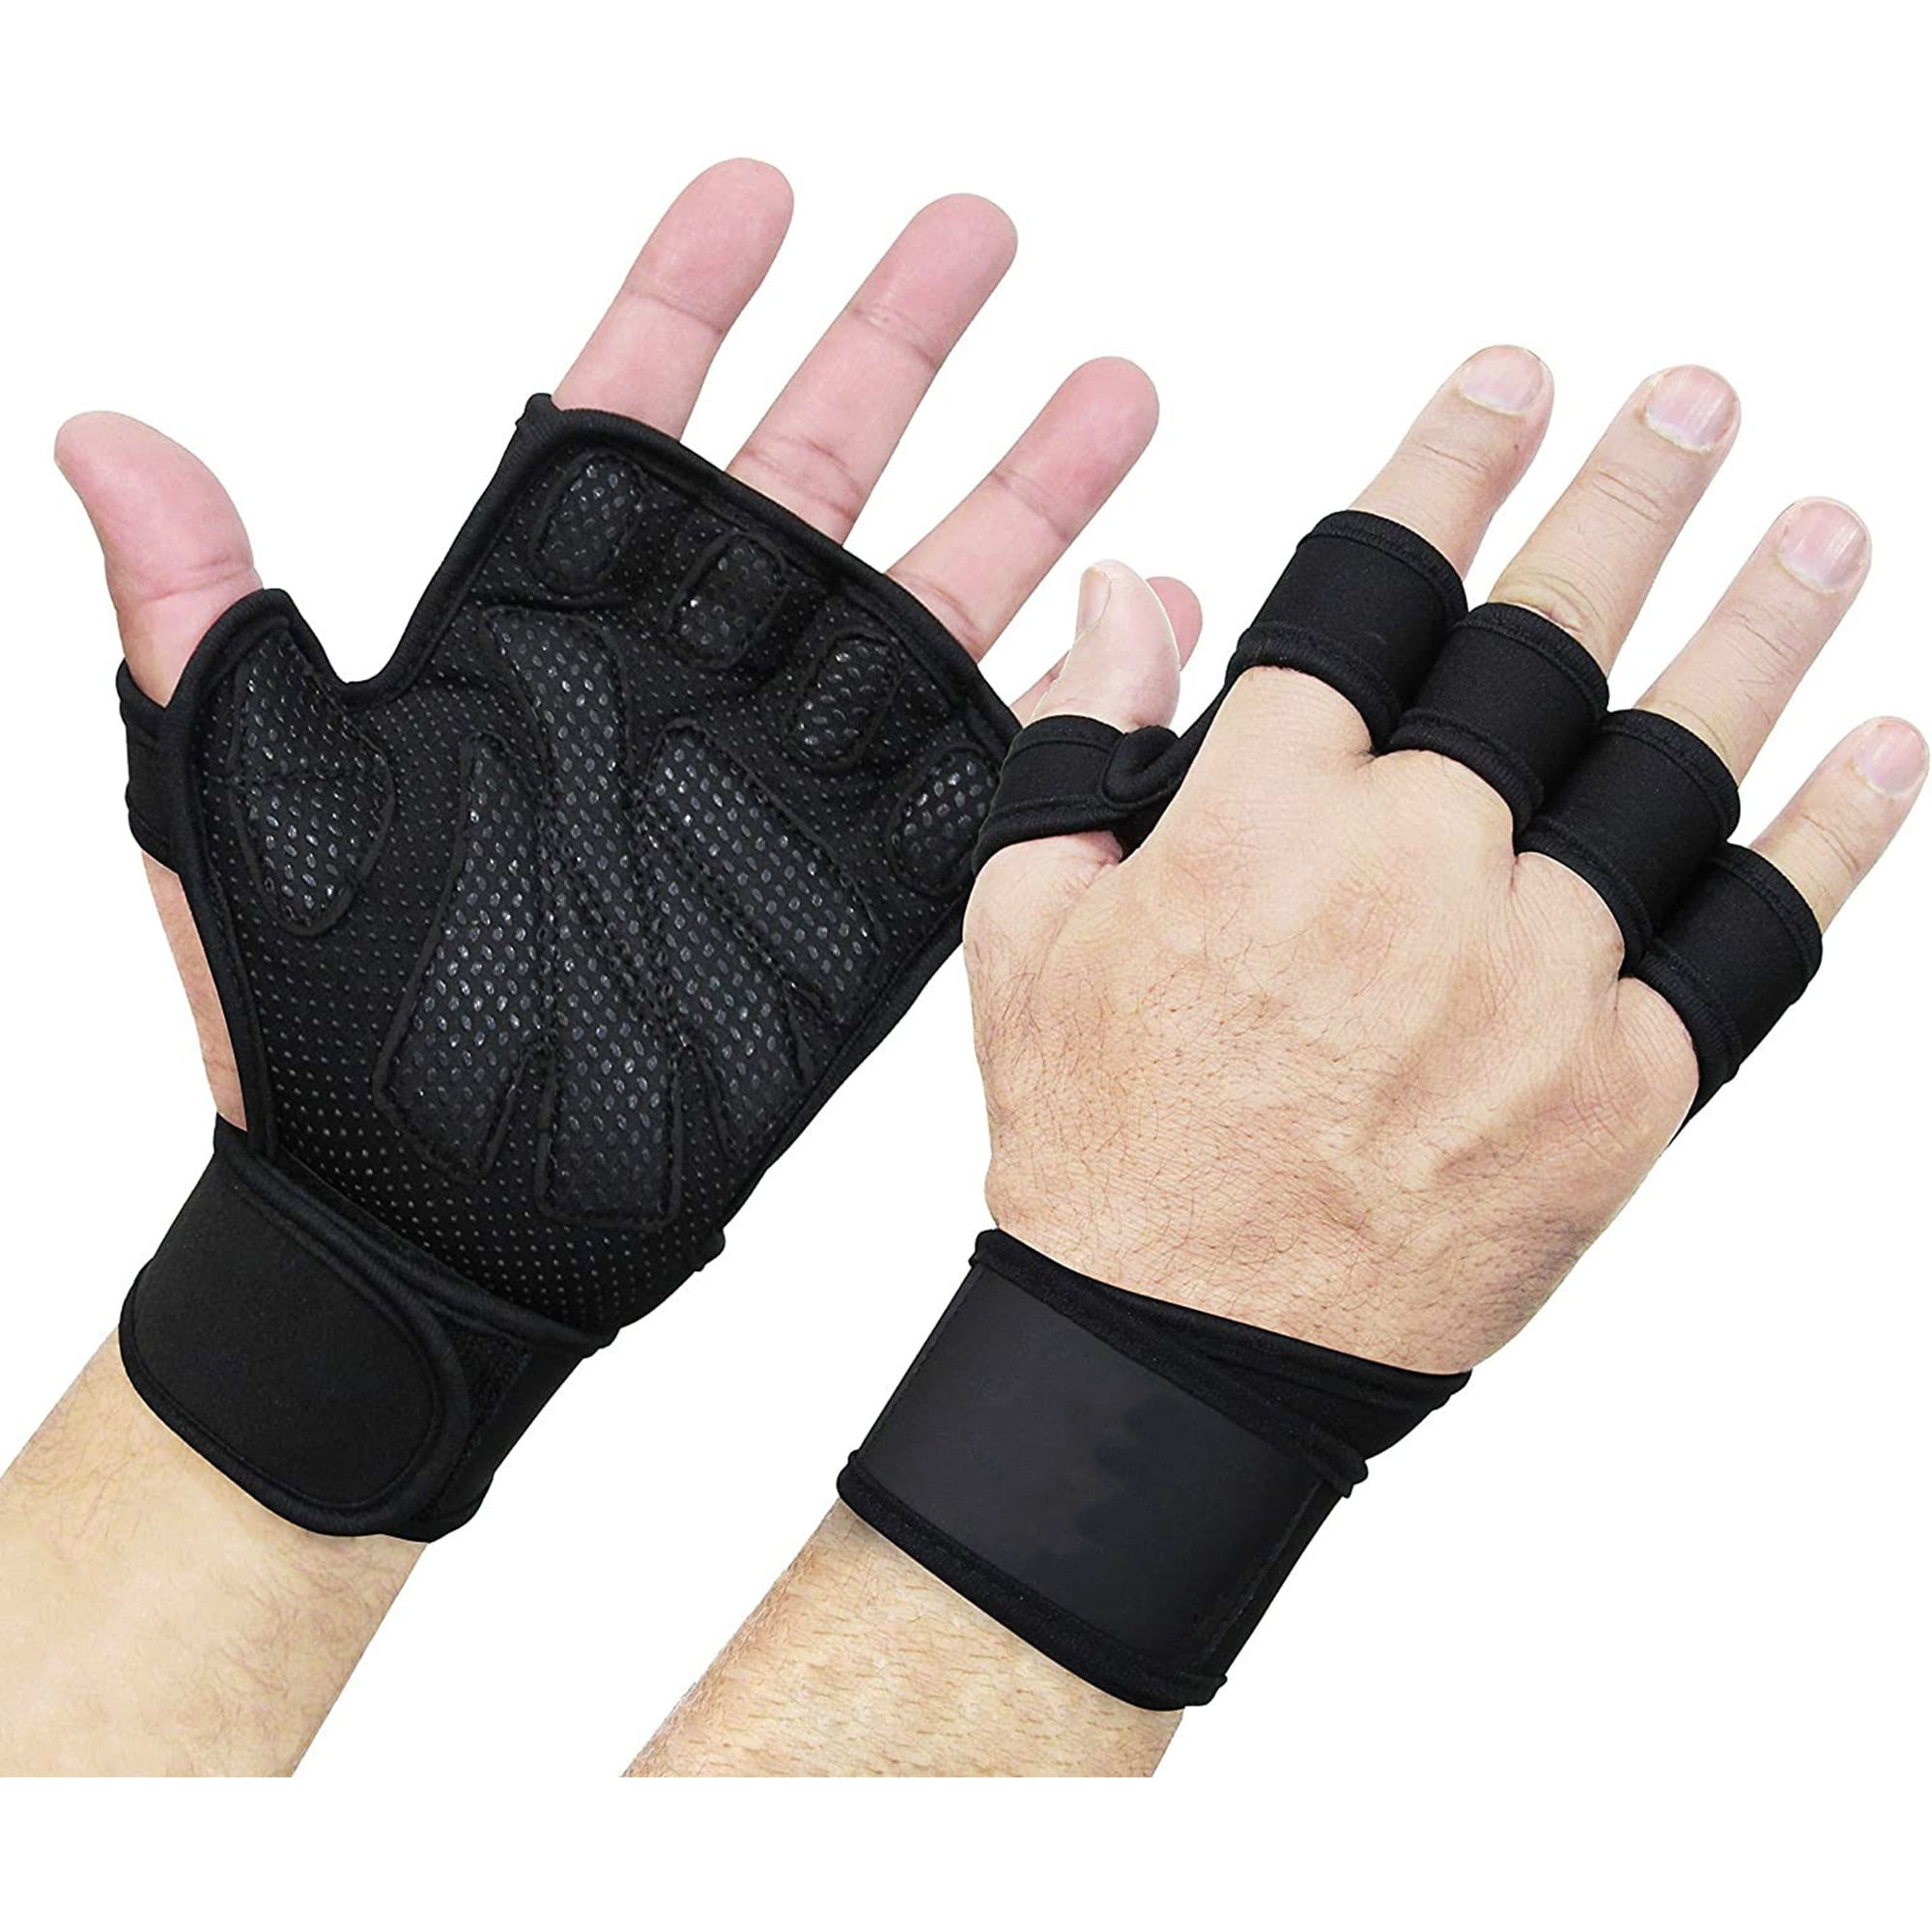 Cycling Supplies Fitness Training Belt Sports Gloves Half Finger Wrist Guard 